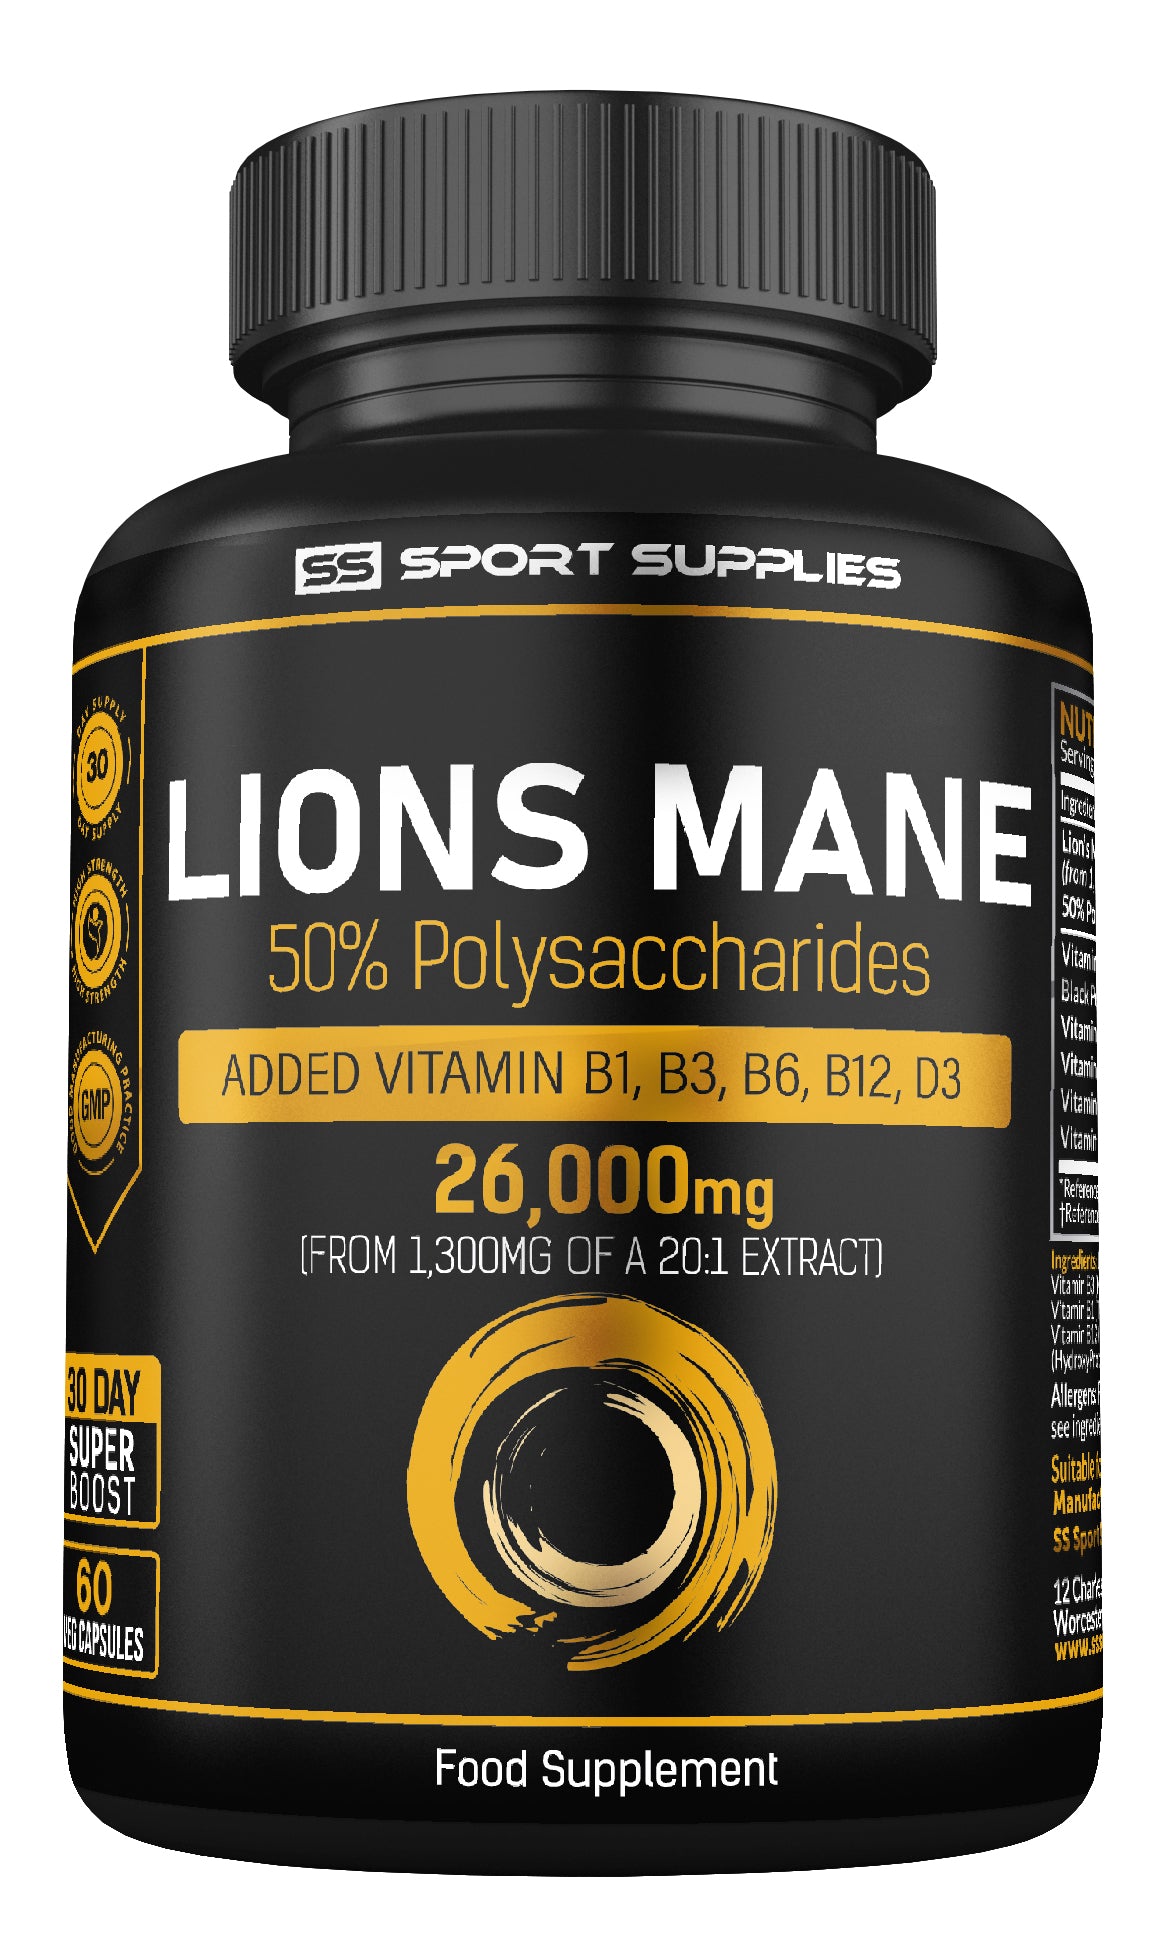 Lions Mane Extract plus 5 Vitamins